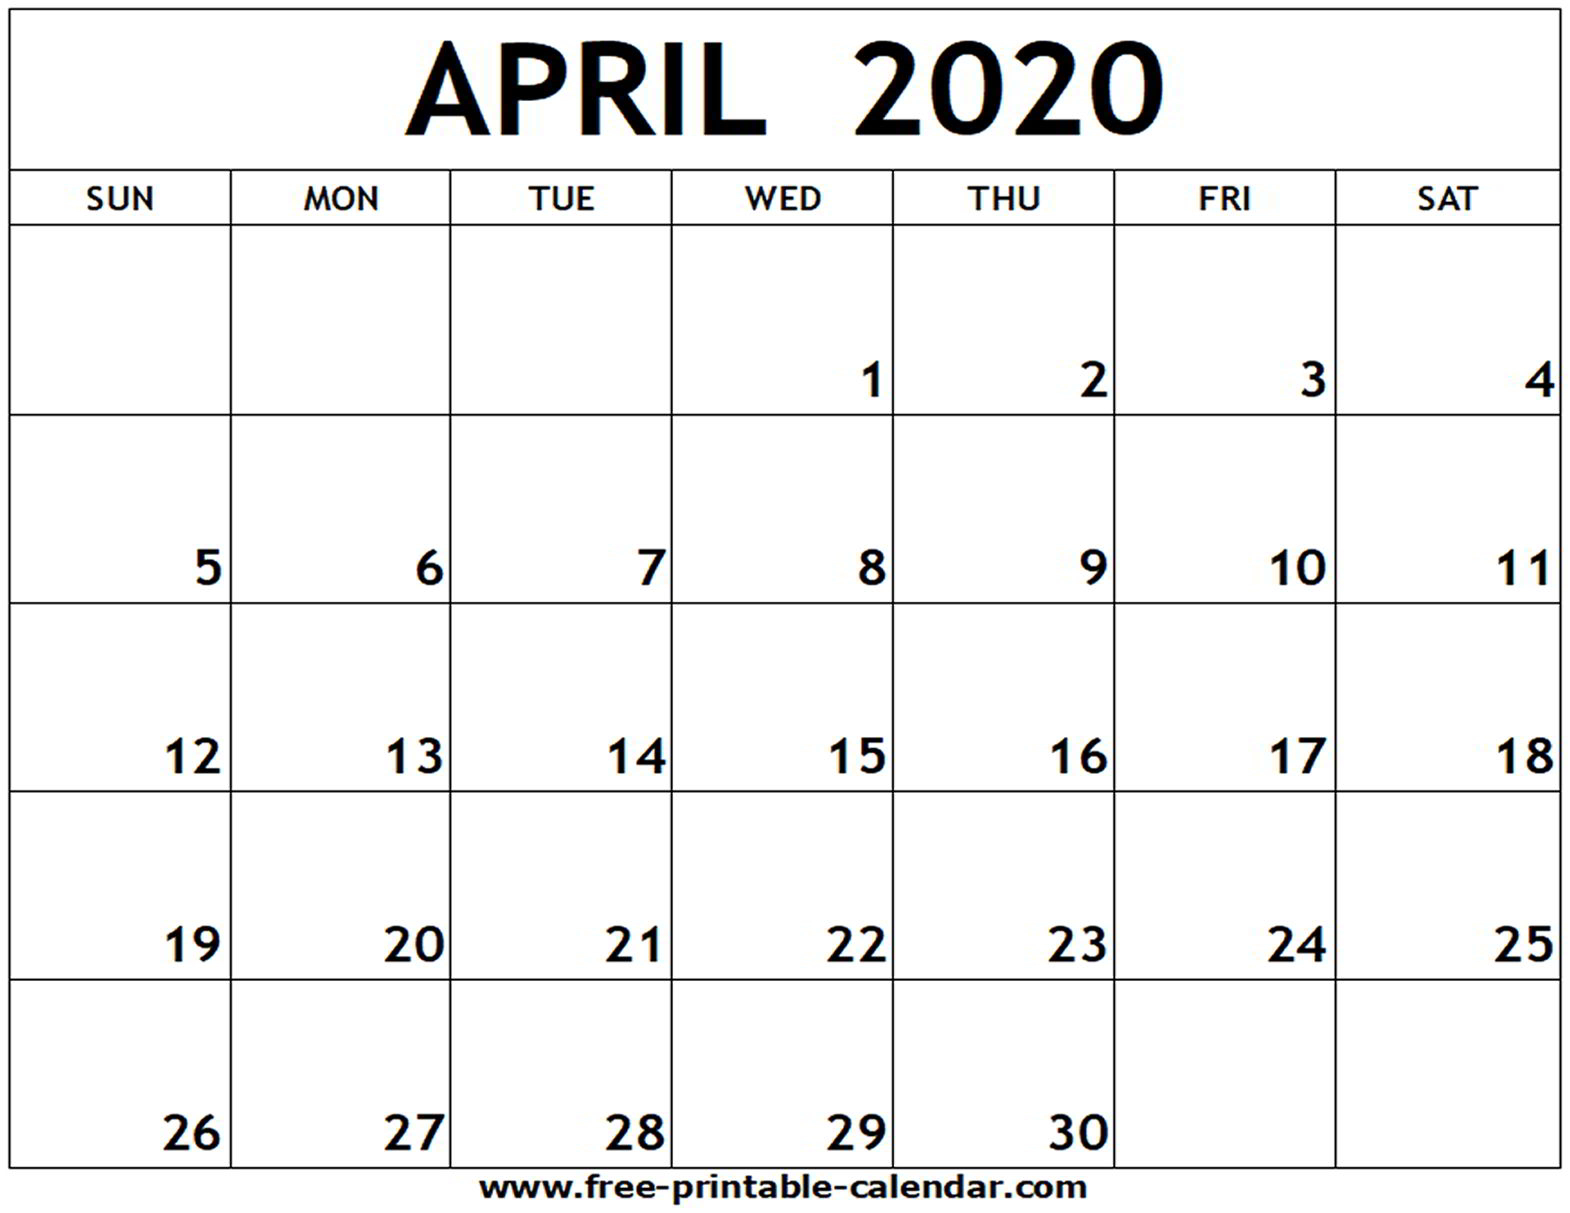 April 2020 Printable Calendar - Free-Printable-Calendar